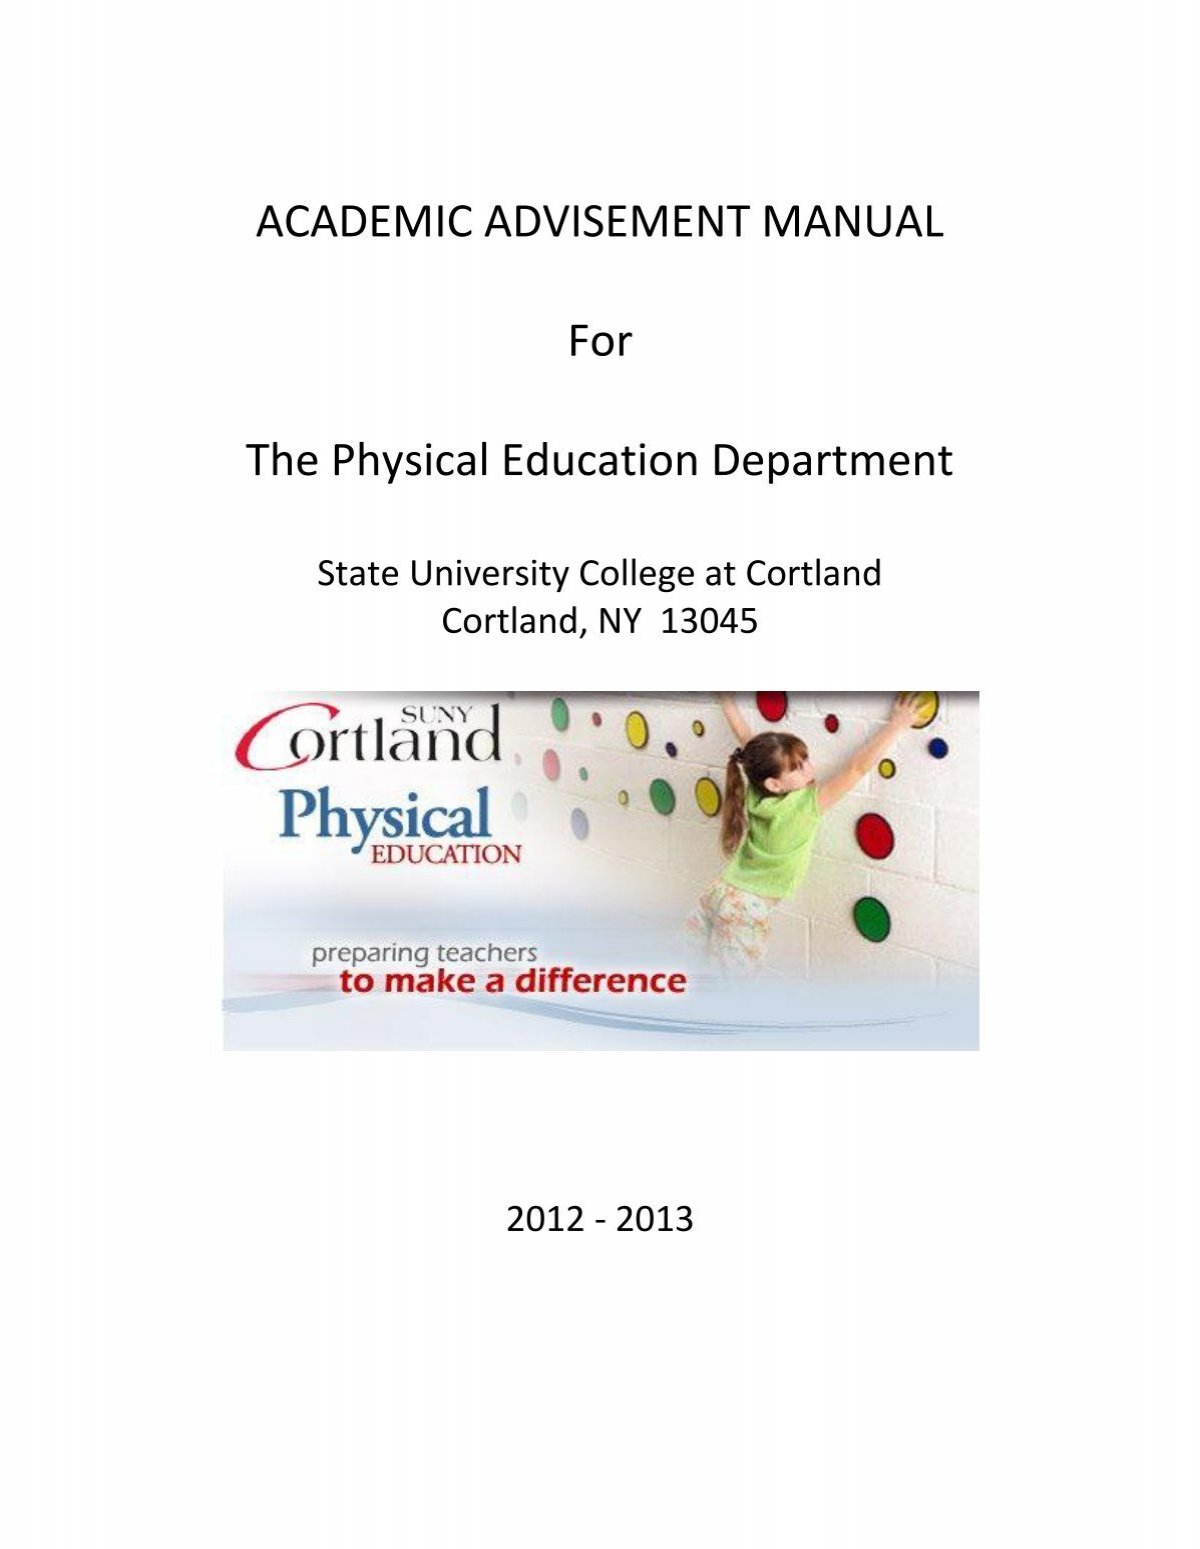 Physical Education Leadership - SUNY Cortland